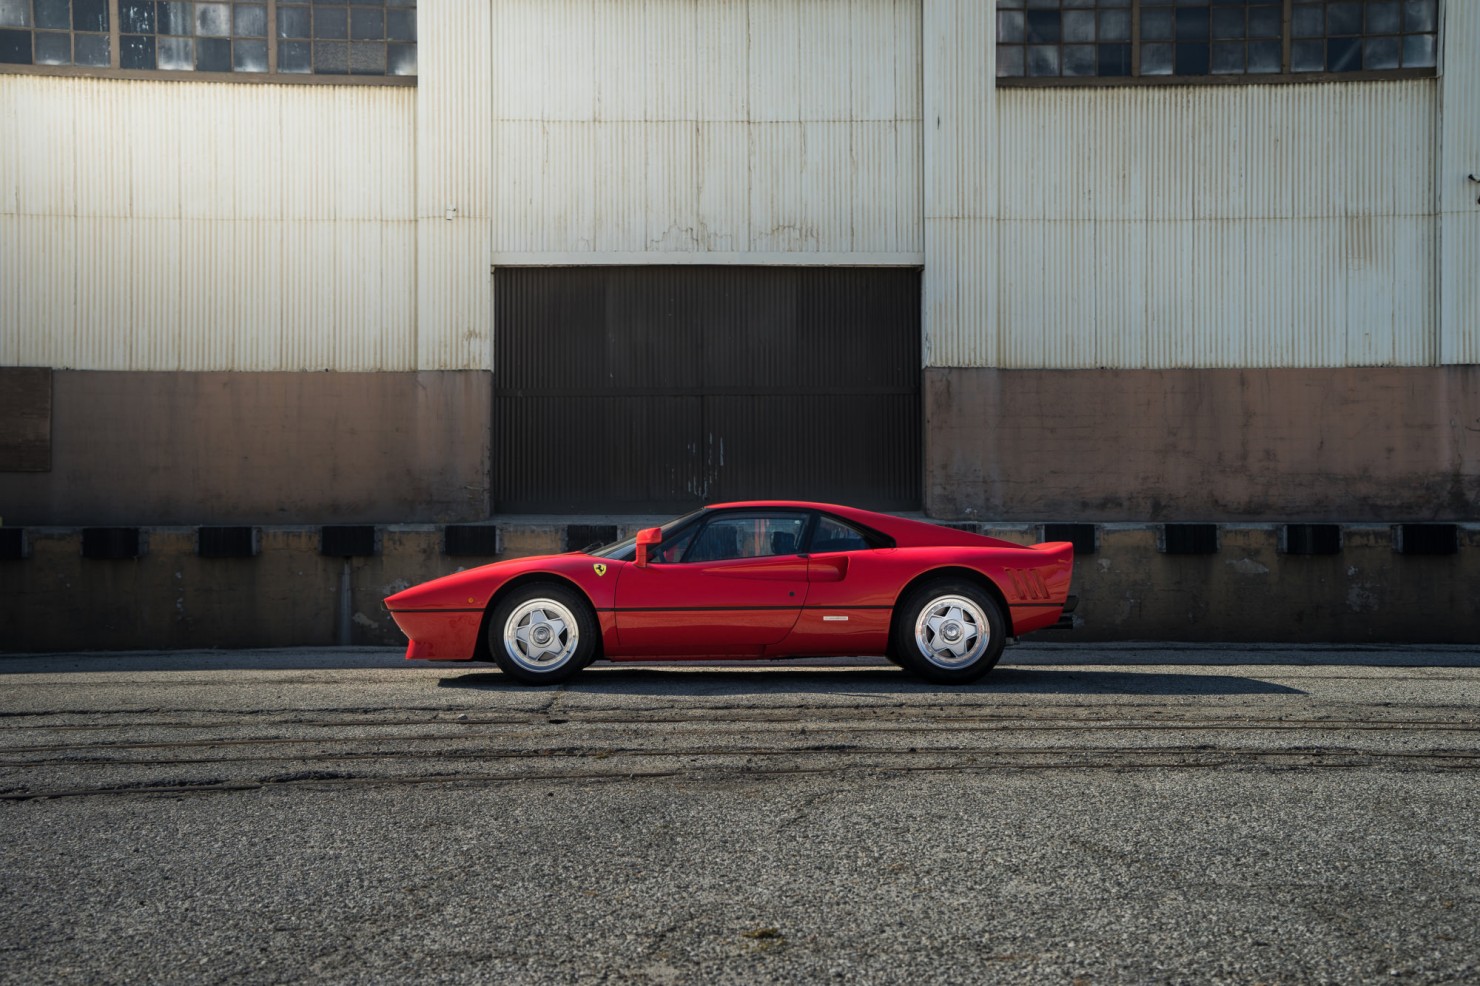 Zeldzame Ferrari 288 GTO volgende week onder de hamer